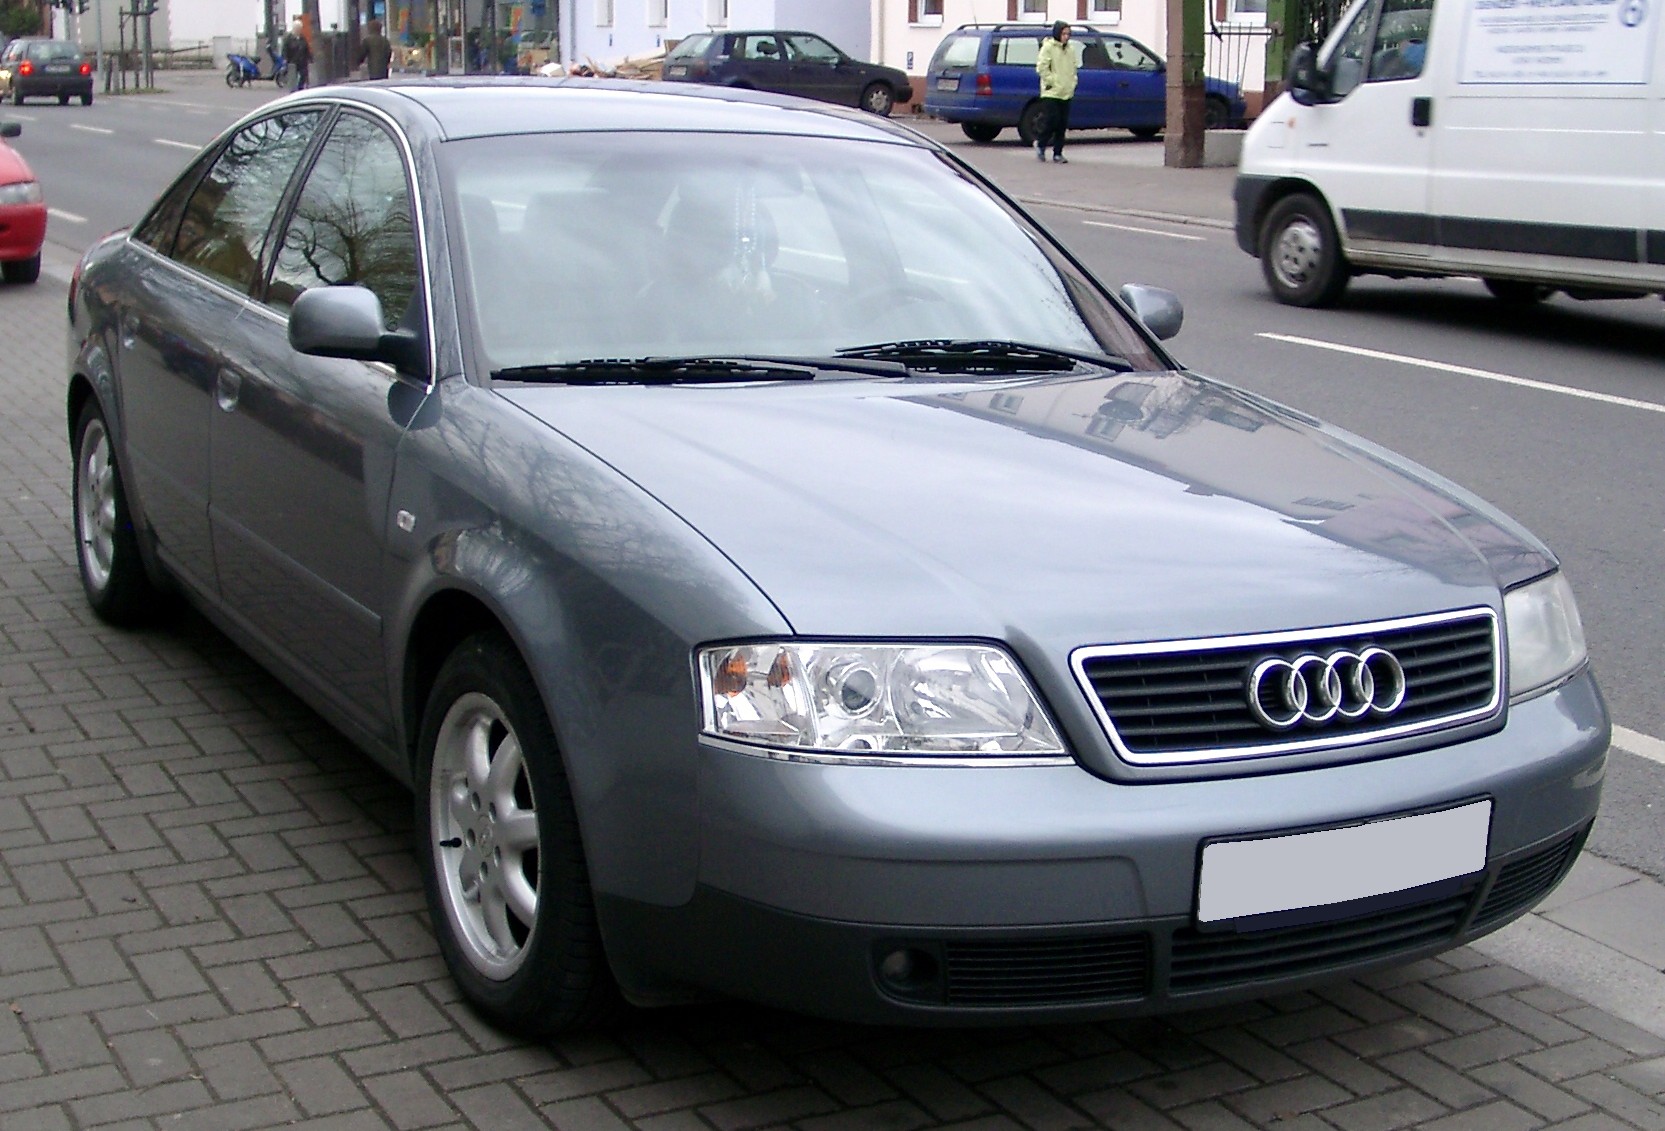 Audi A6 II — Wikipédia